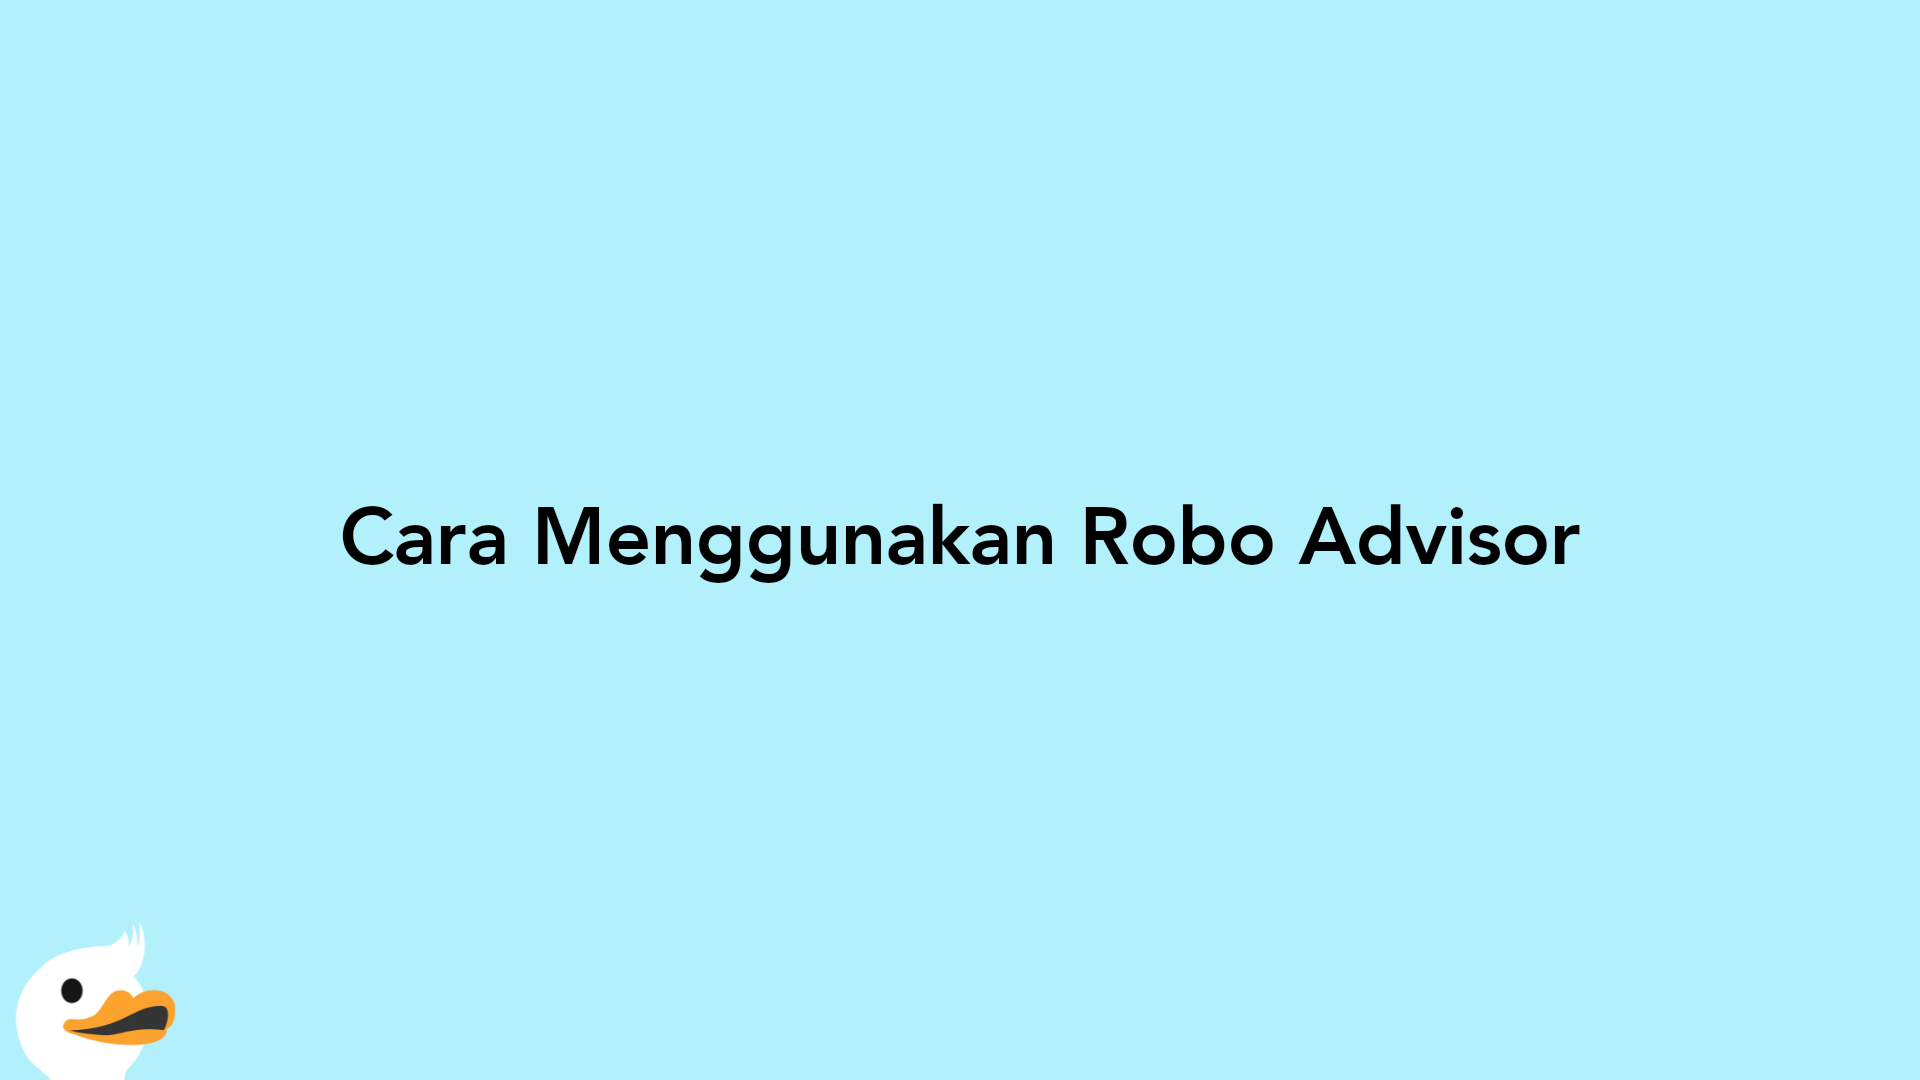 Cara Menggunakan Robo Advisor